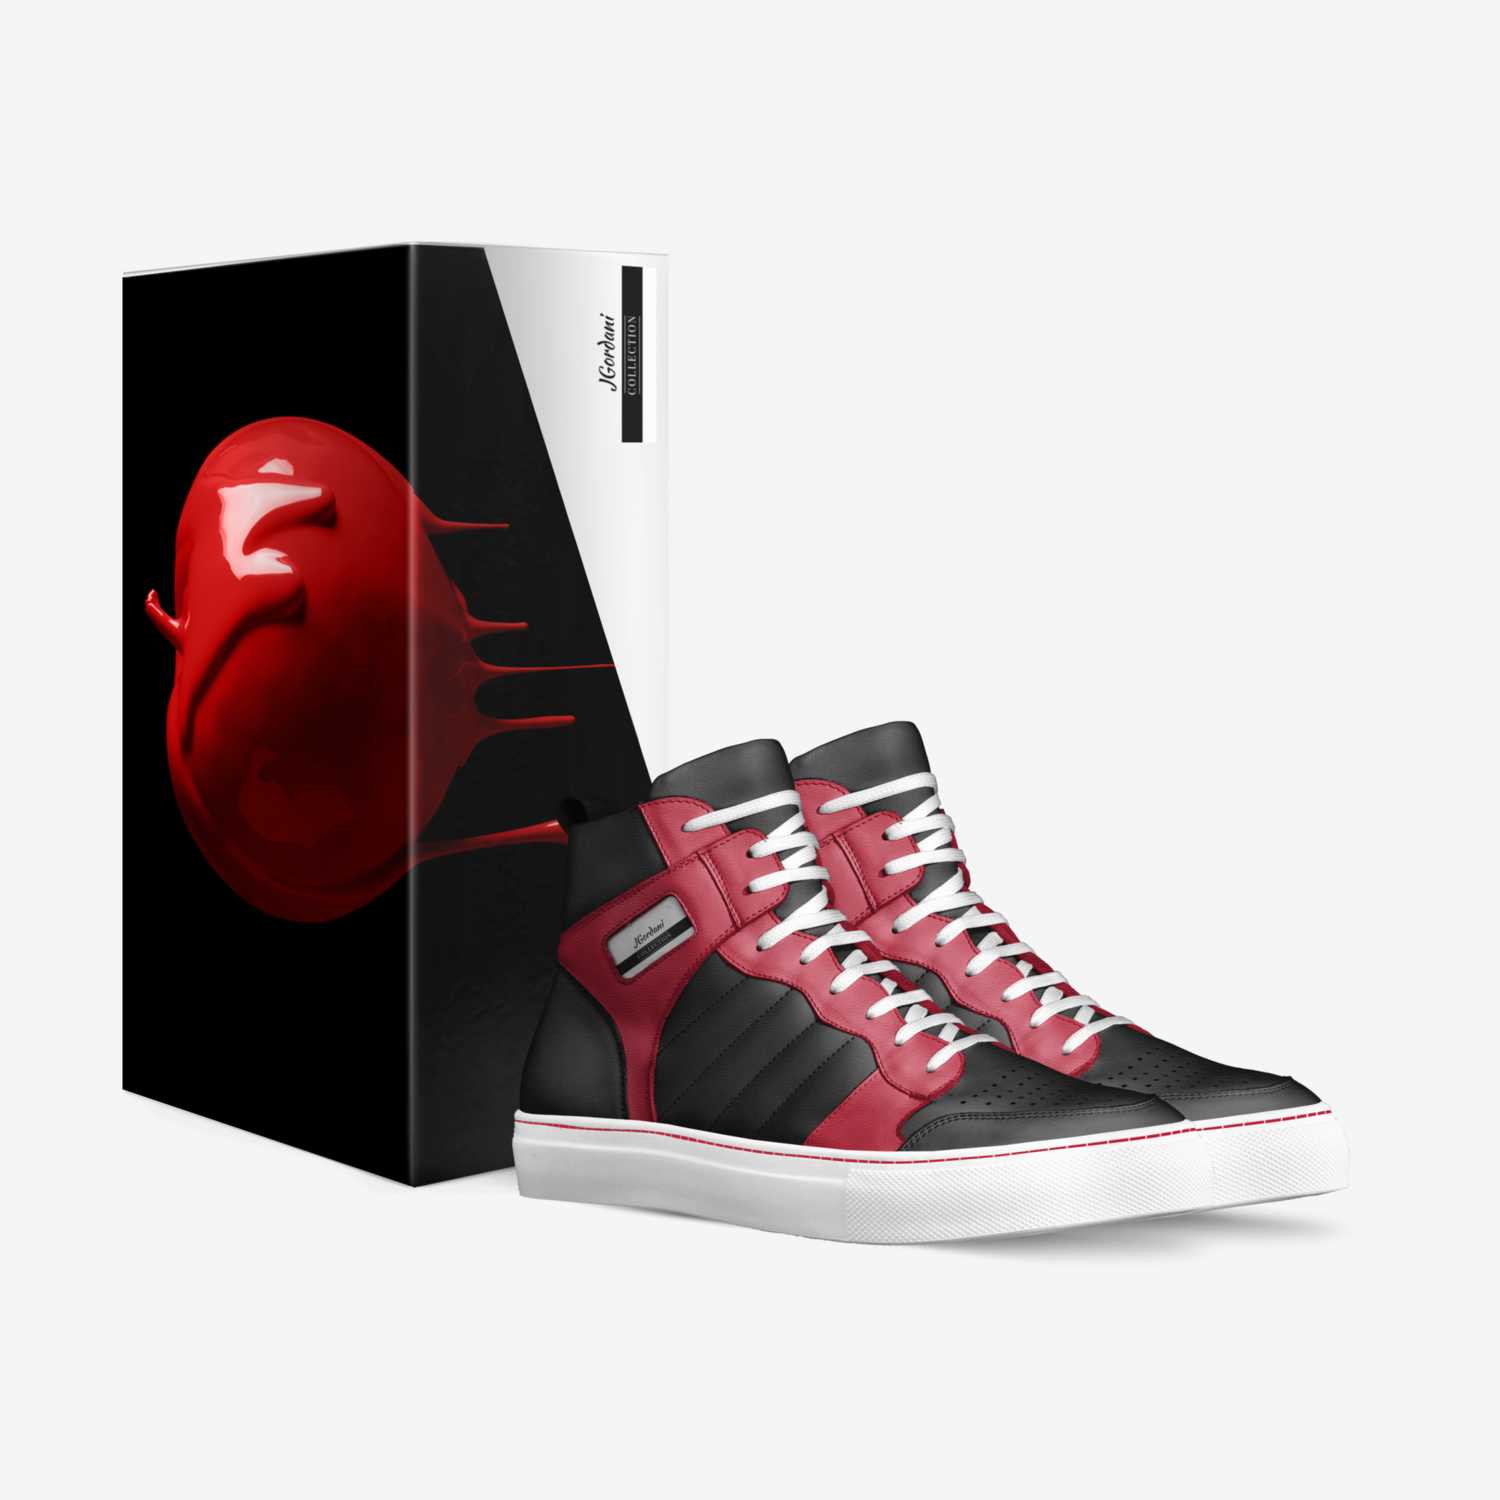 JGordani custom made in Italy shoes by Cynthia Warner | Box view